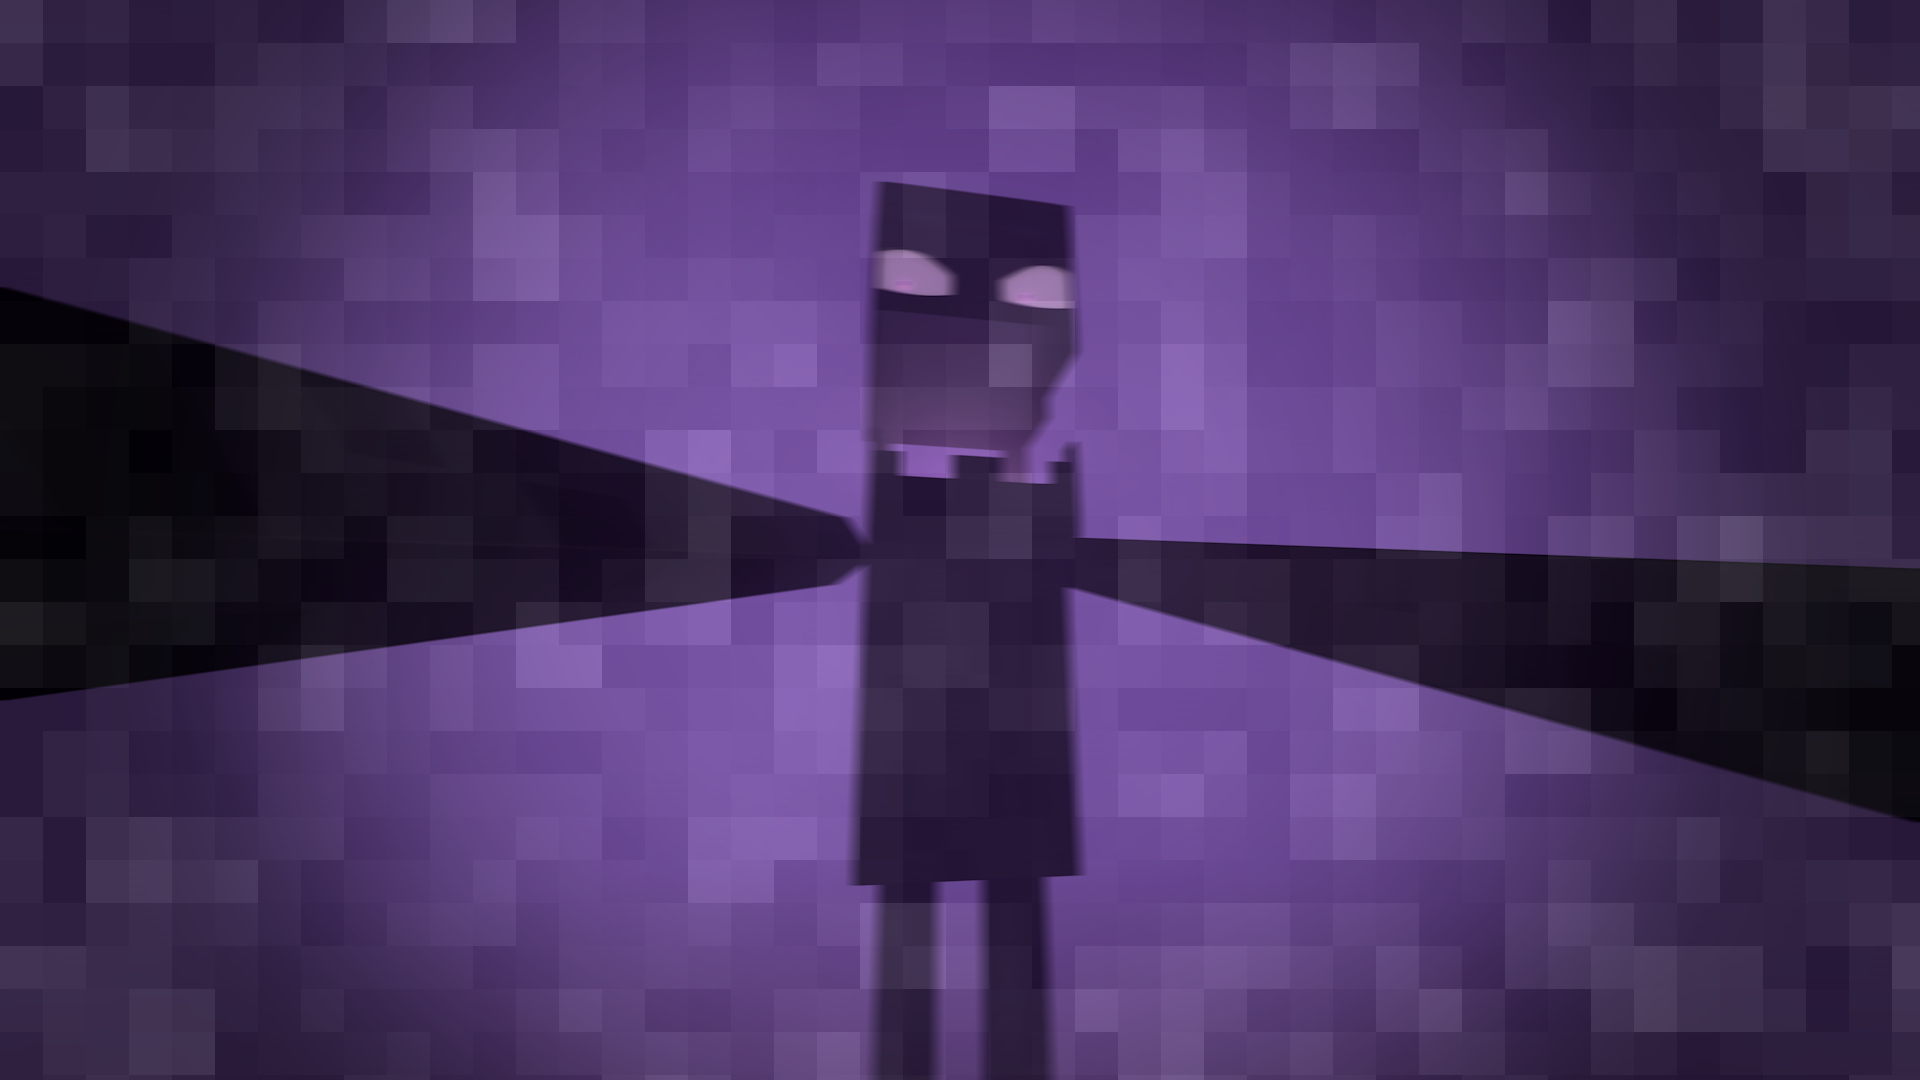 HD desktop wallpaper featuring a Minecraft Enderman character on a purple background.